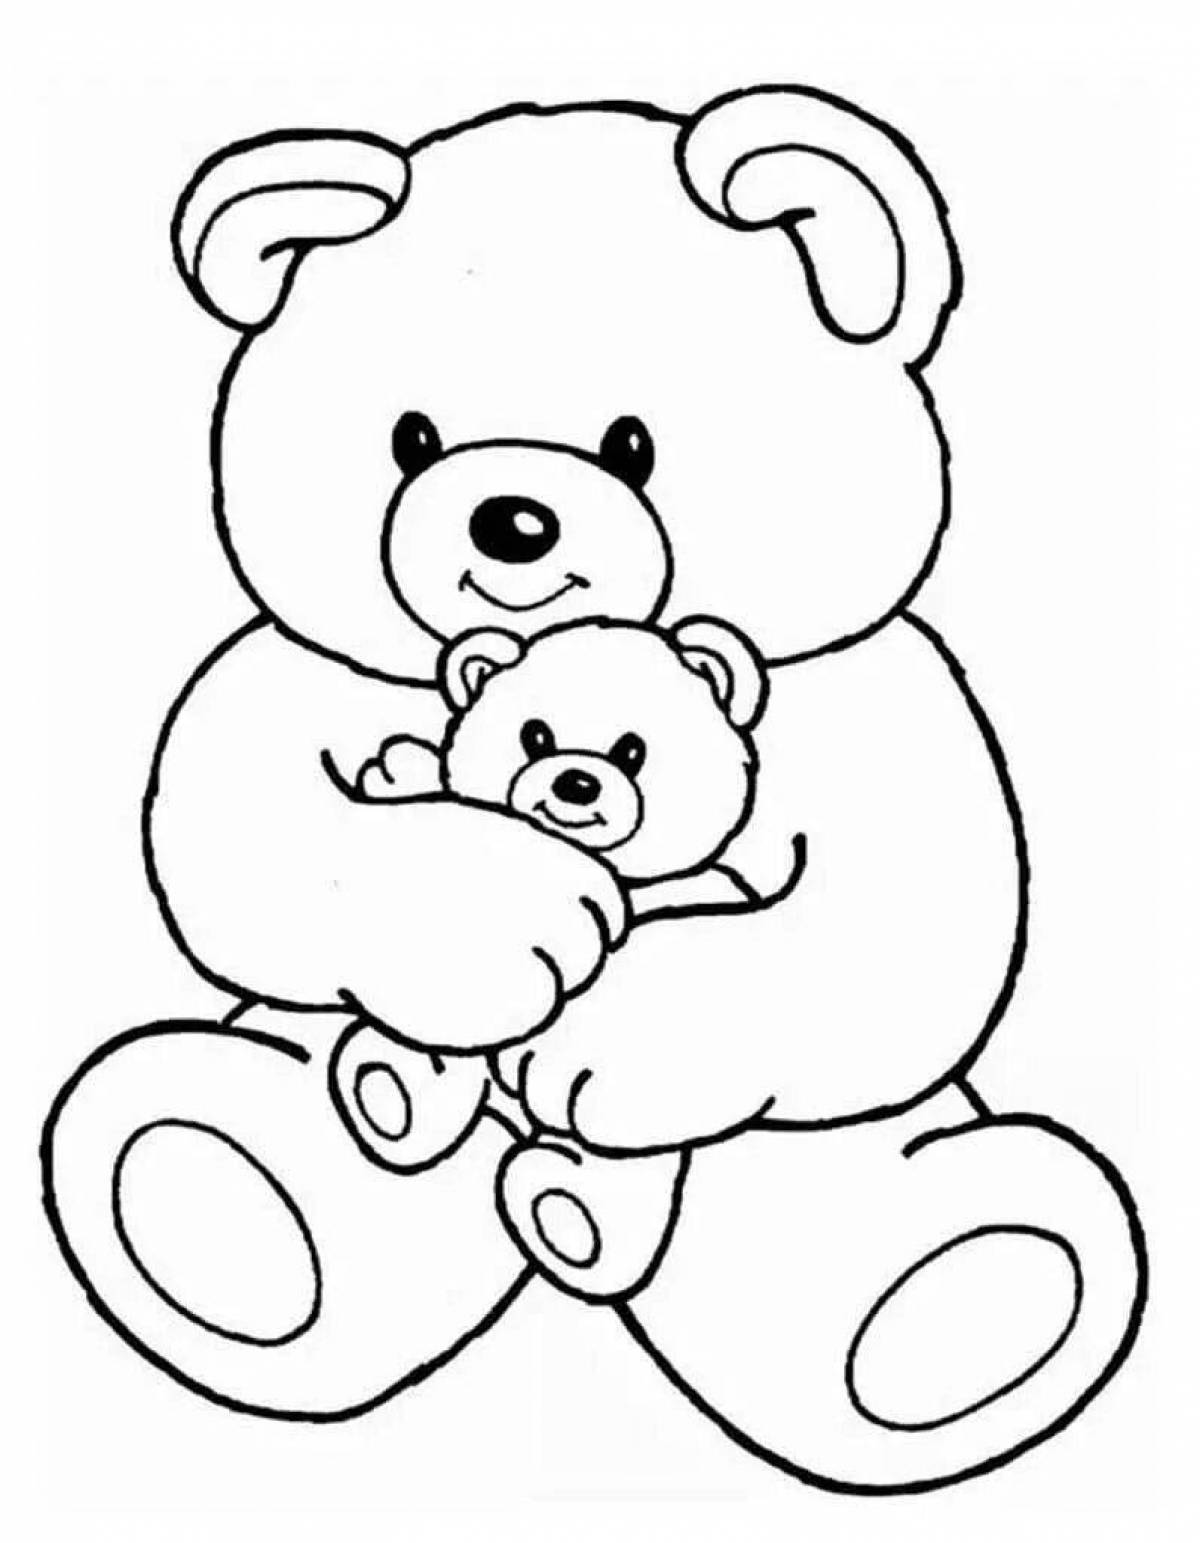 Coloring book cheerful teddy bear